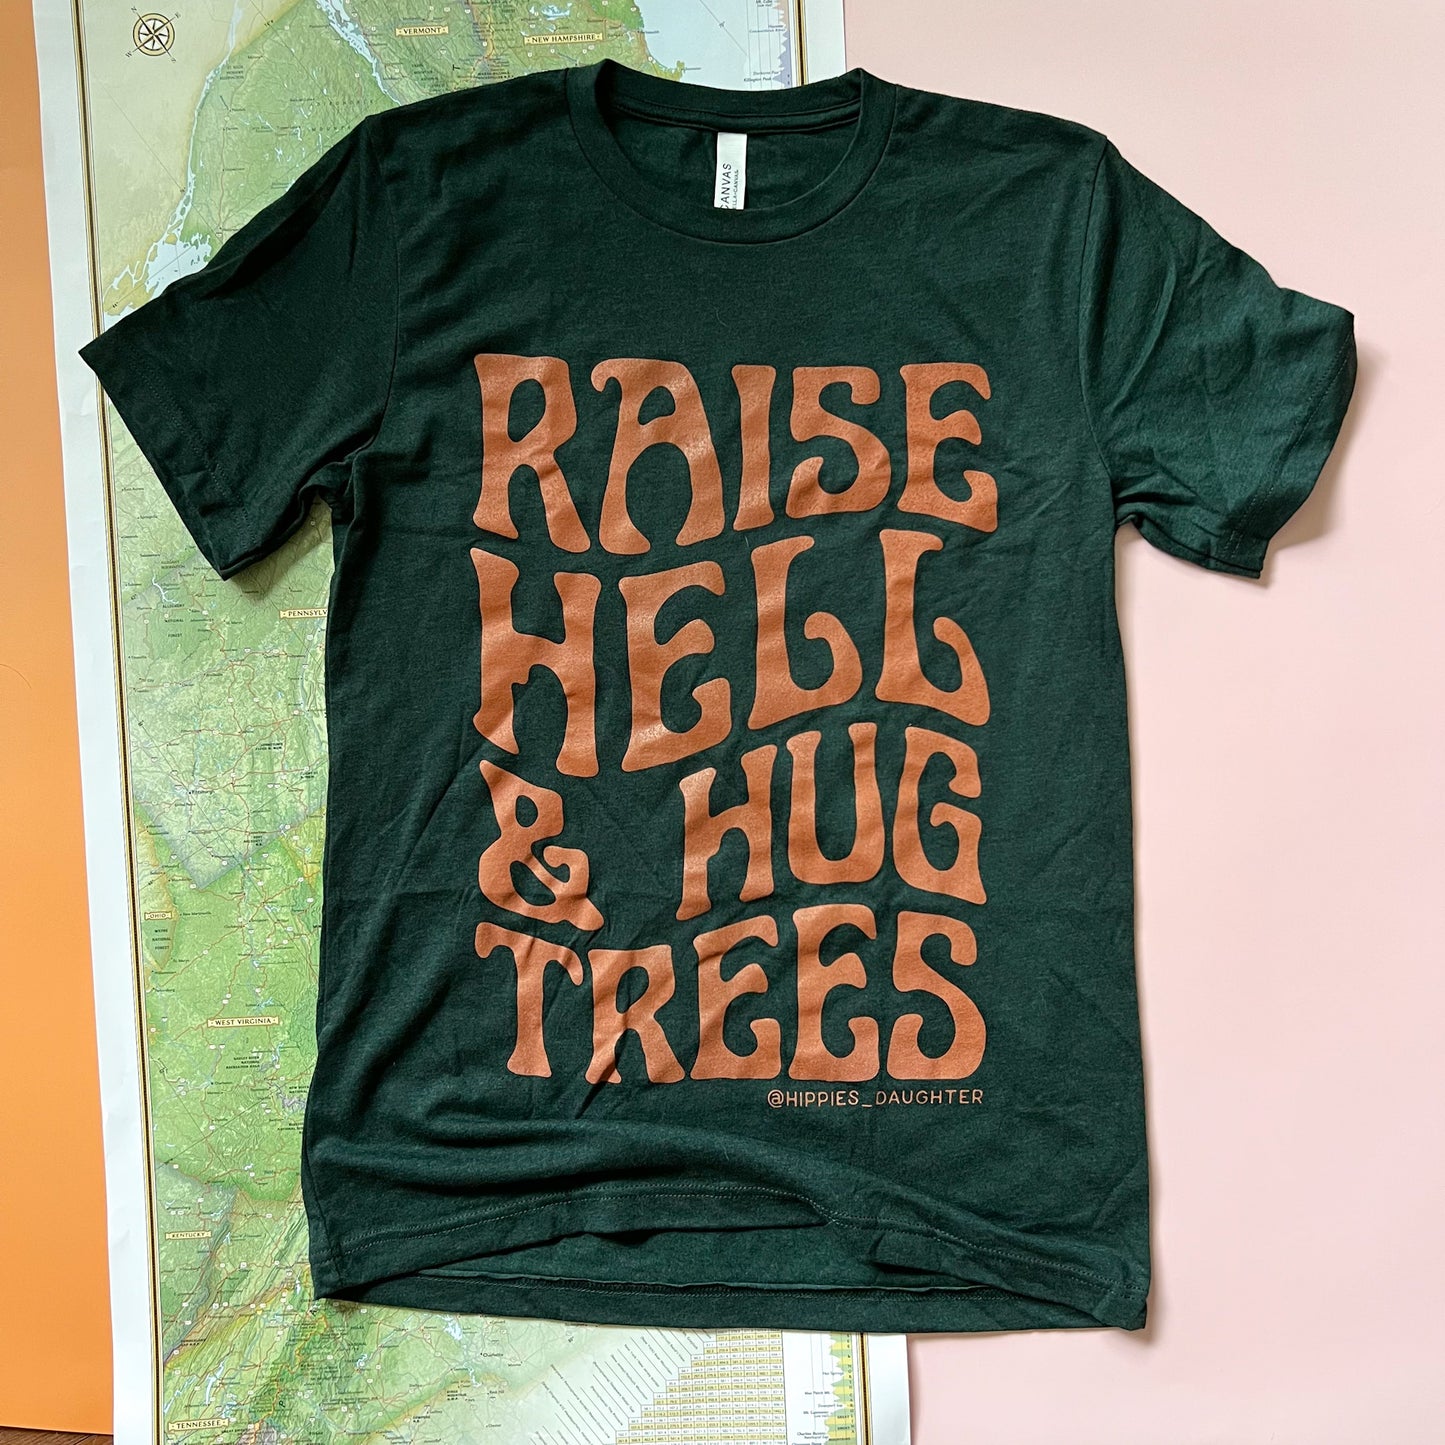 Raise hell hug trees // t-shirt